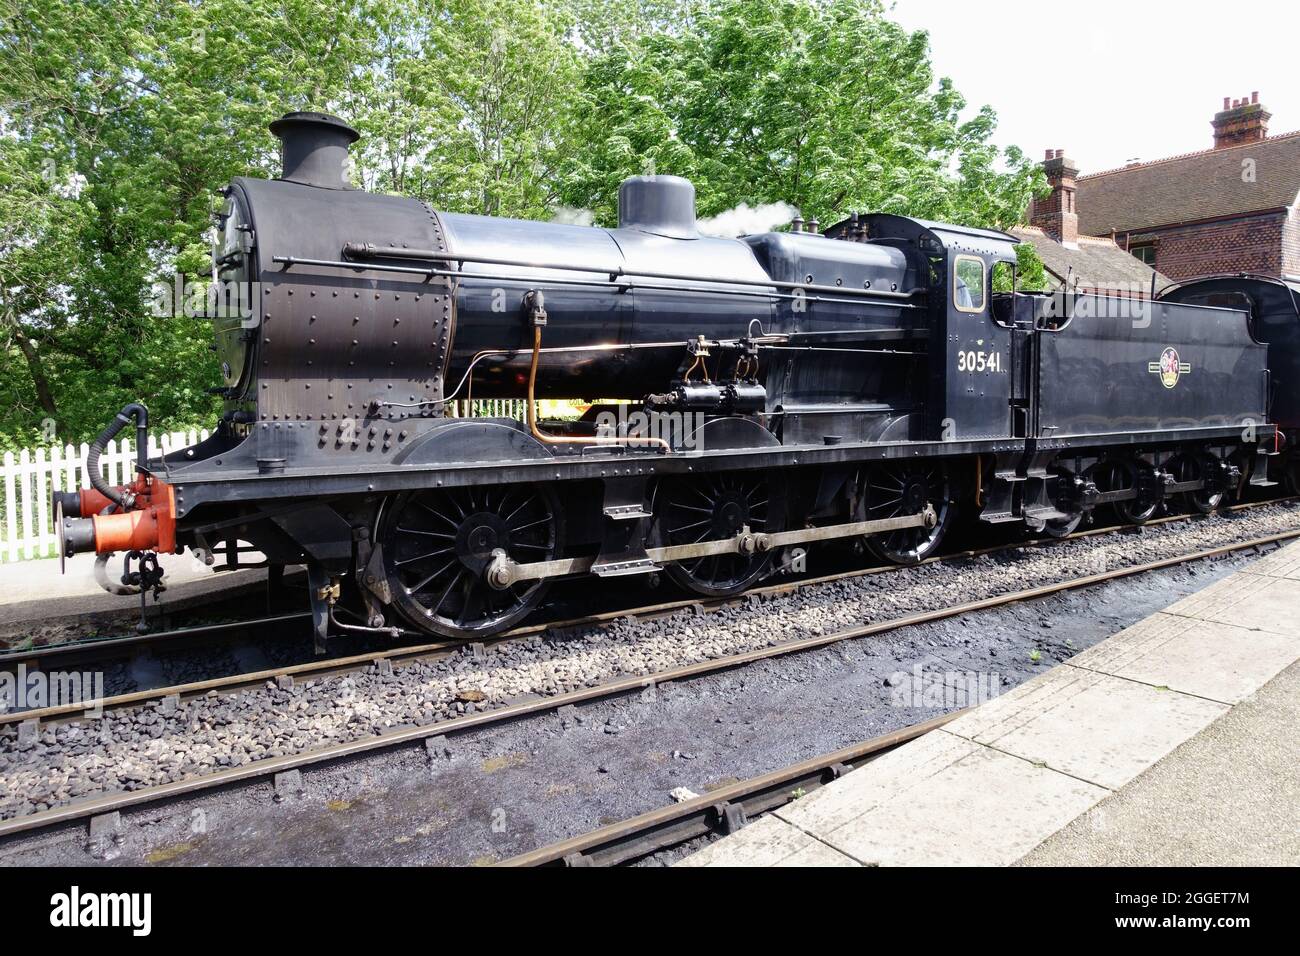 Steam train on the Bluebell railway Stock Photo